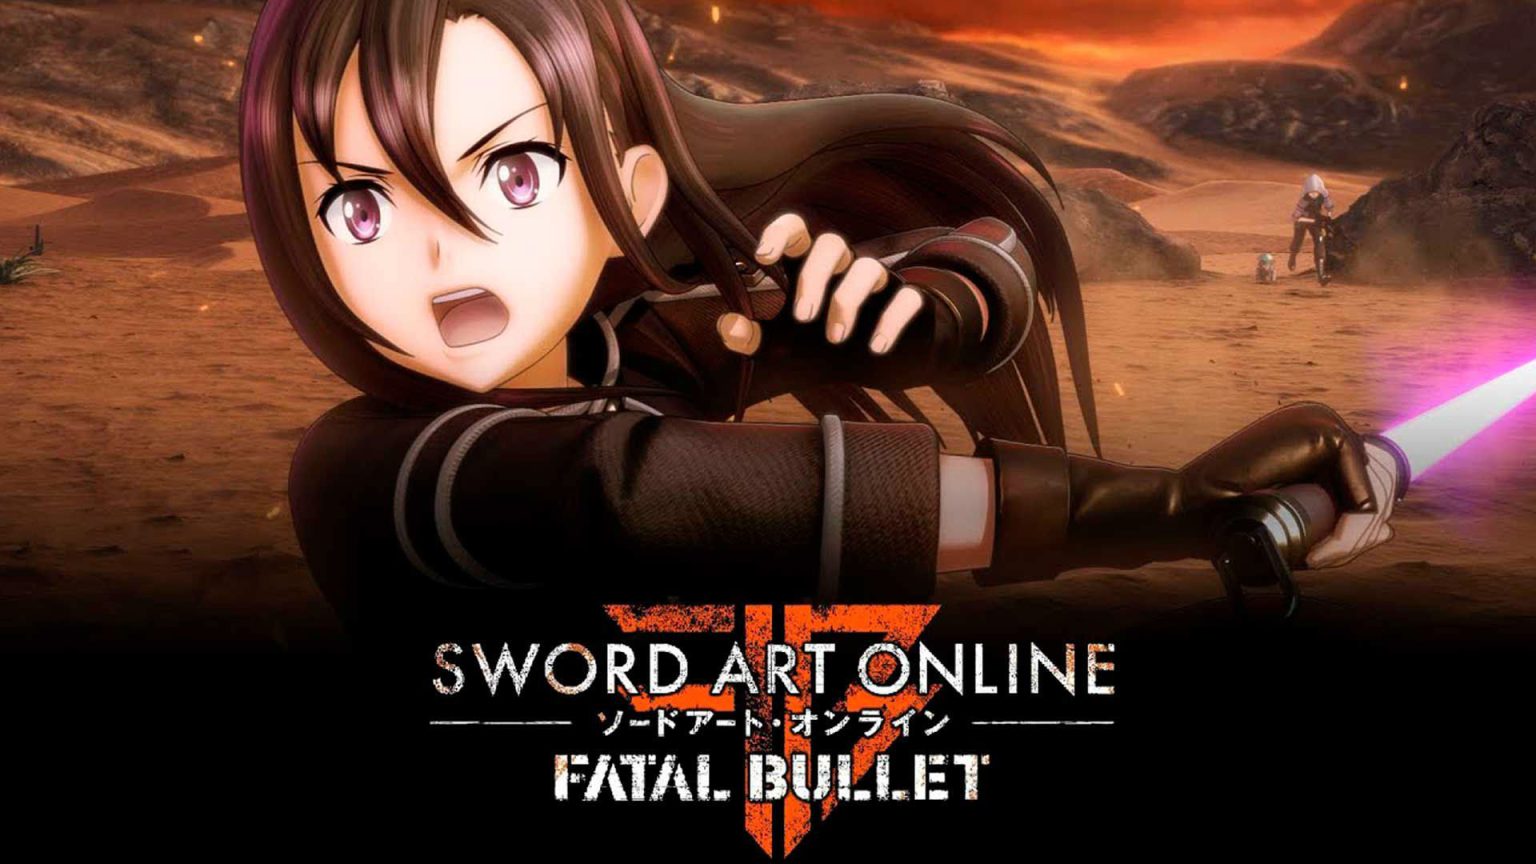 sword art online fatal bullet